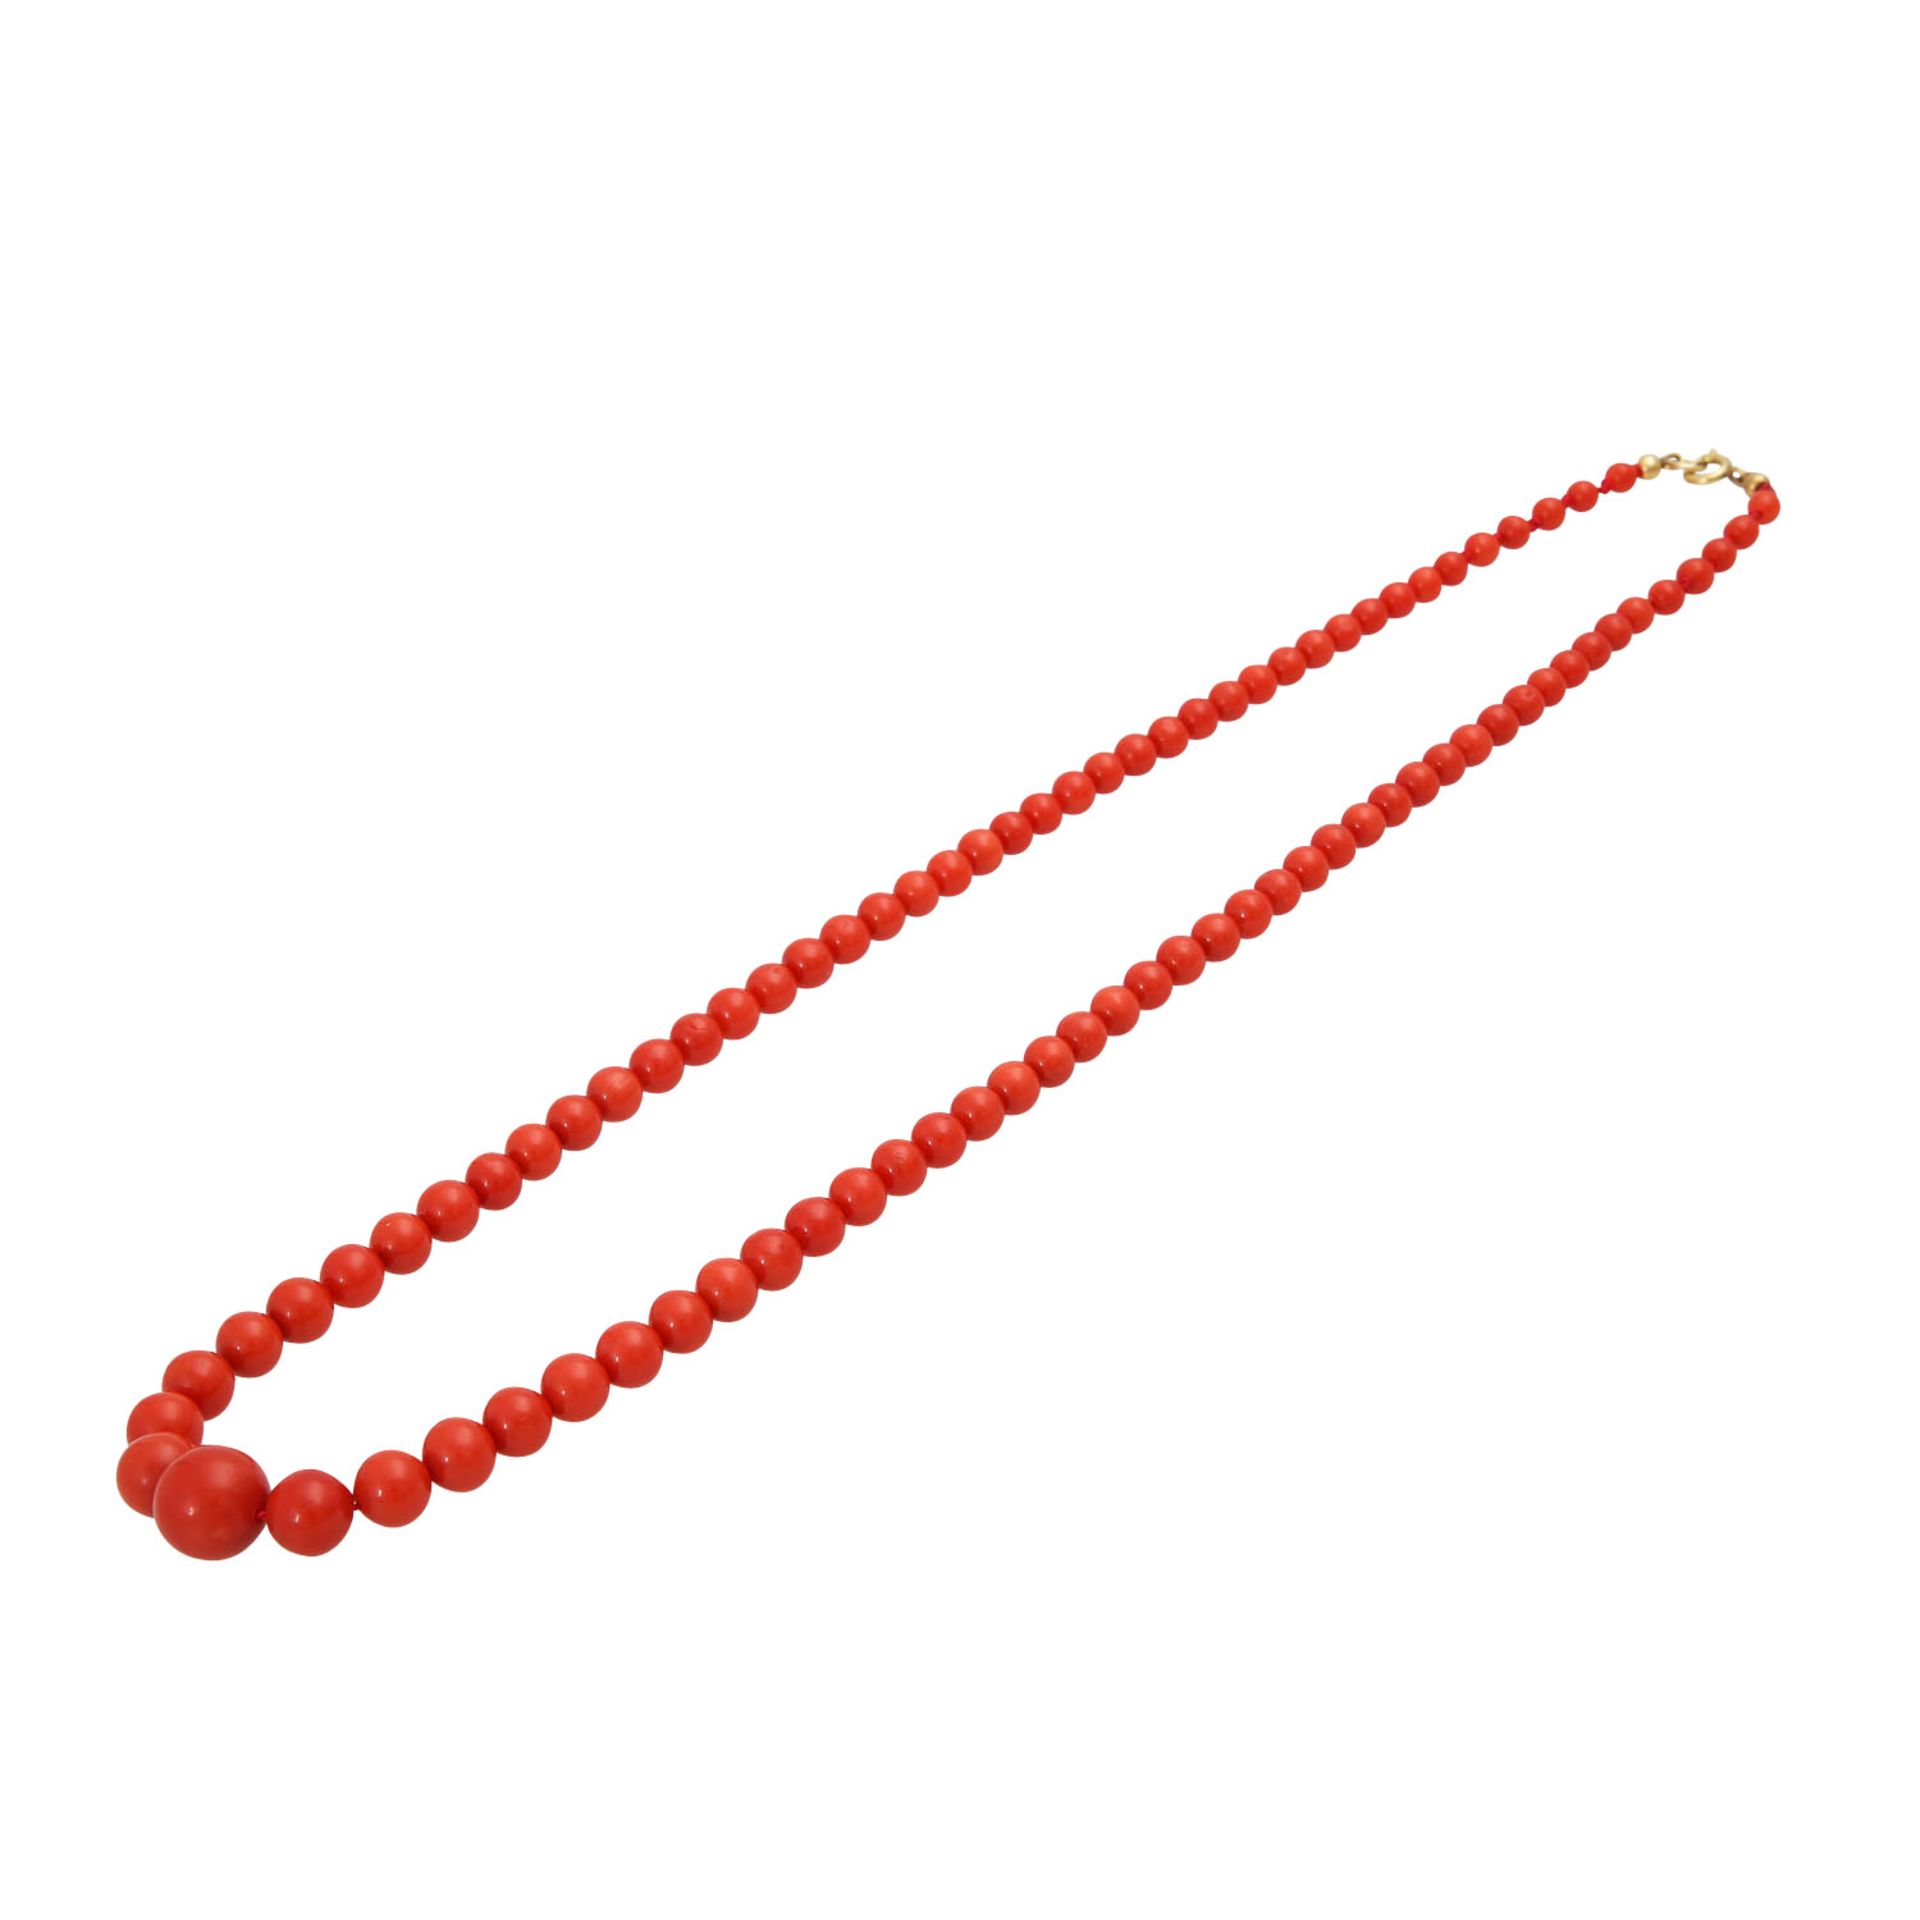 Collier aus Korallenkugelnin kräftigem Rot, im Verlauf ca. 4-10 mm, vergoldeter Federring. L: ca. 49 - Bild 3 aus 4